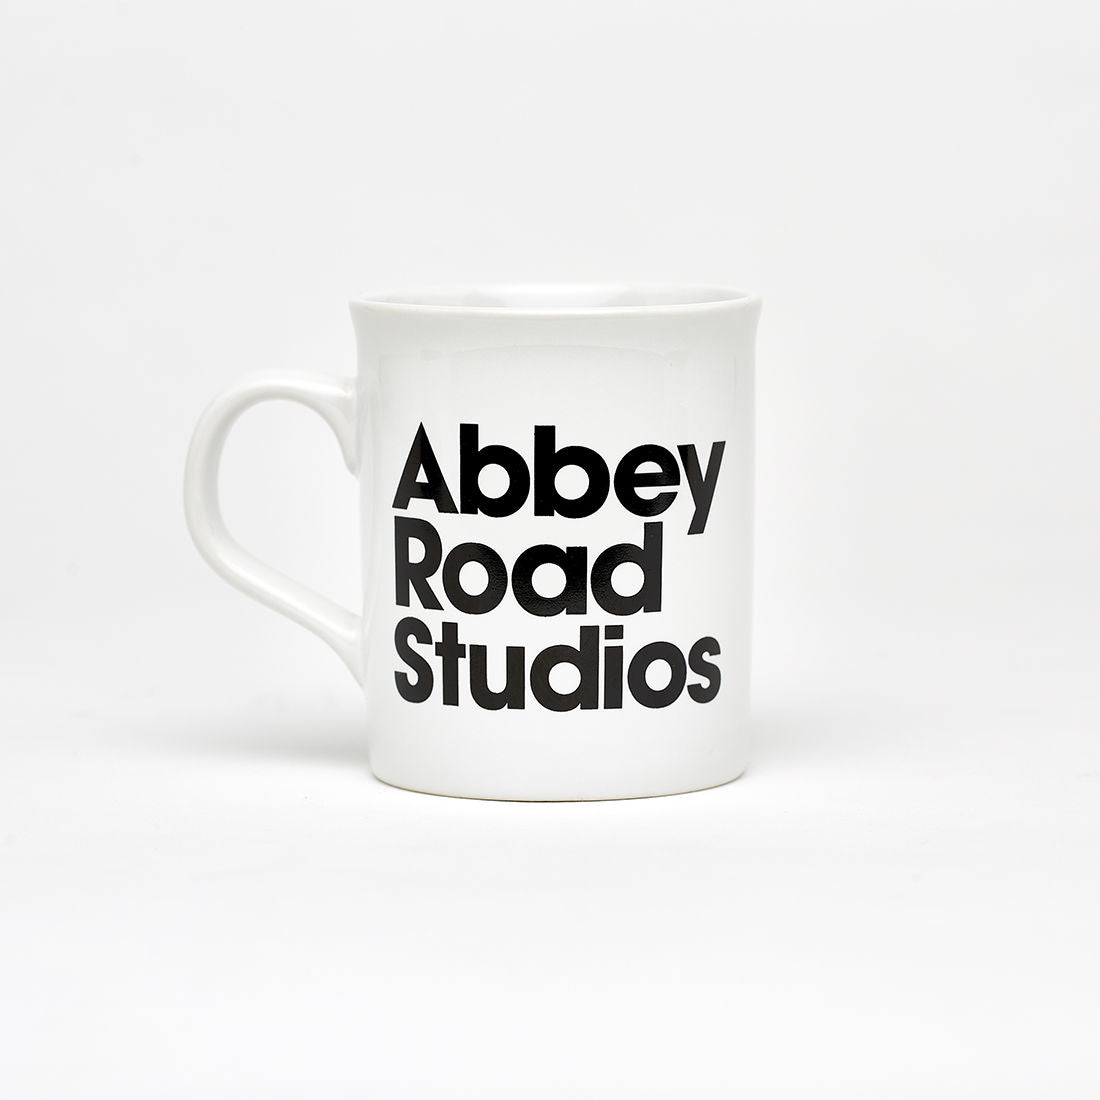 Abbey Road Studios - Abbey Road Studios Mug White